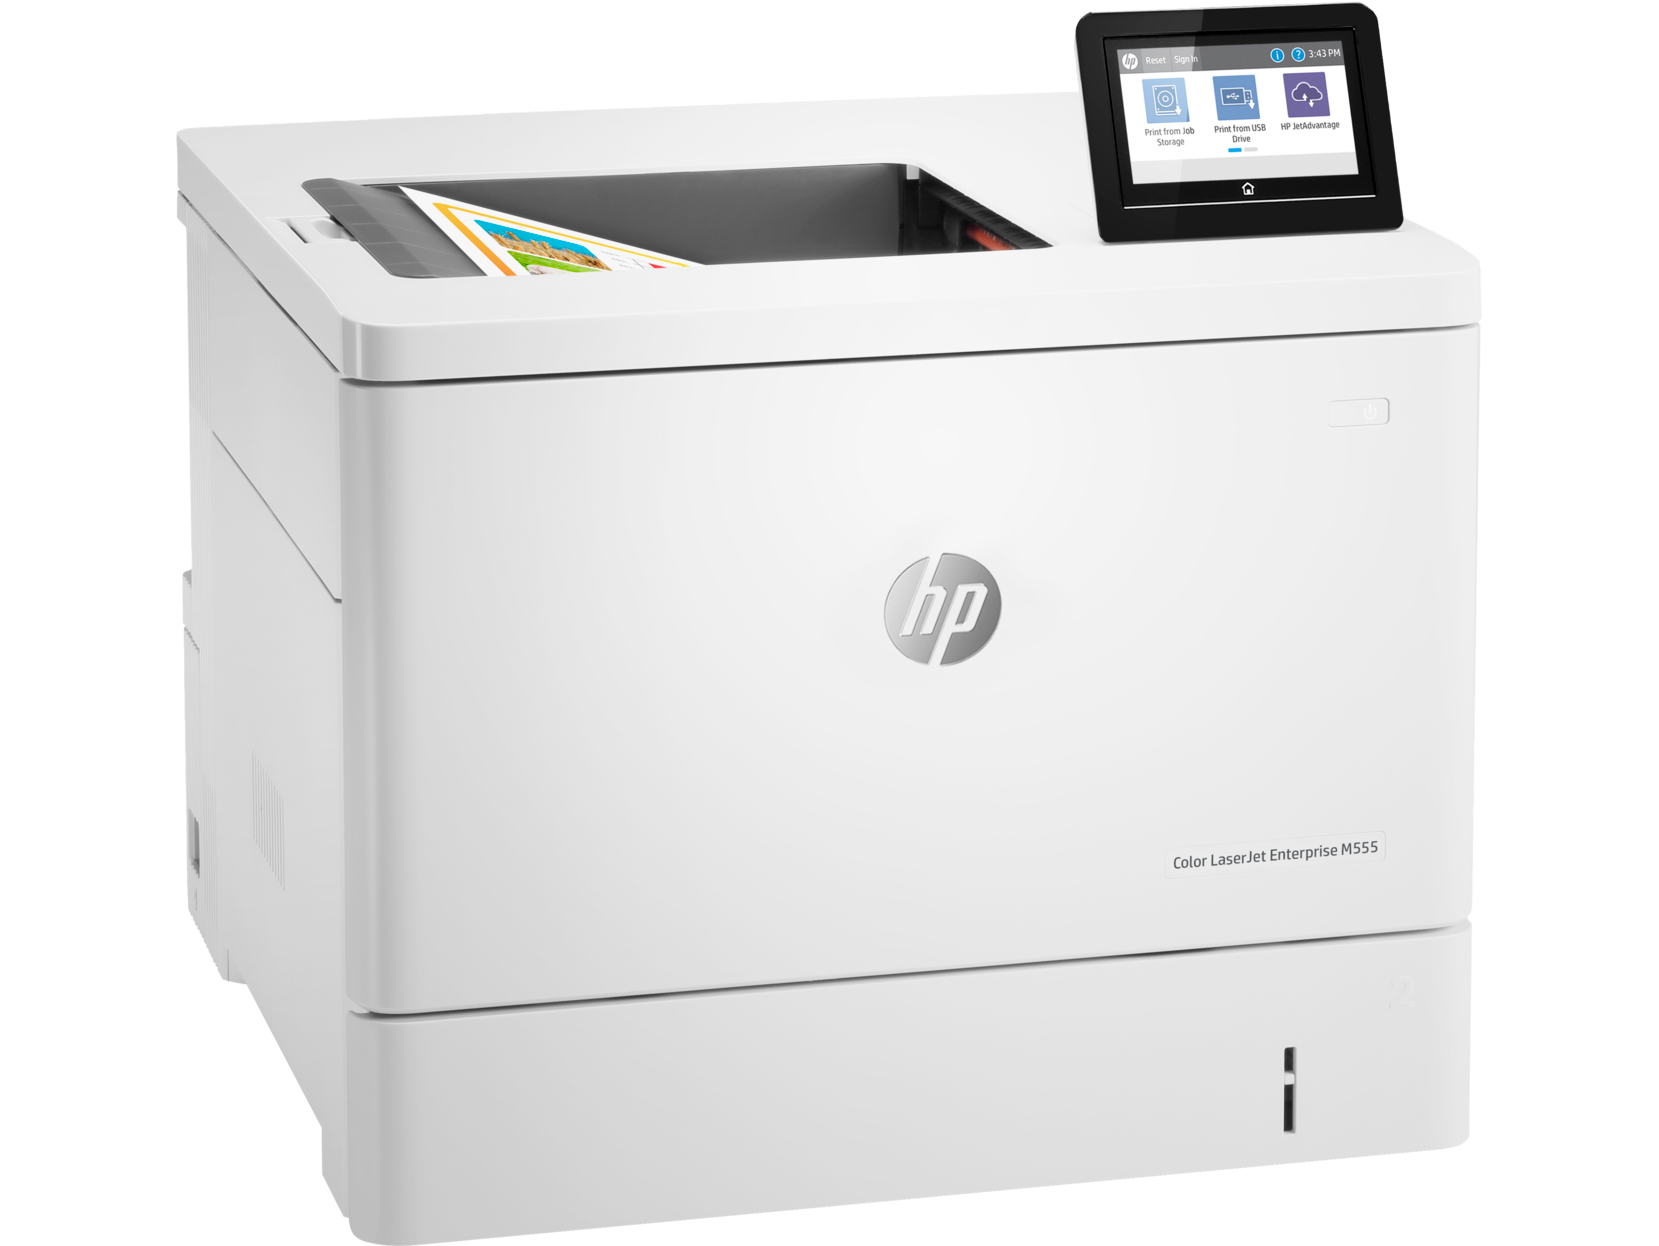 طابعة اتش بي ليزر جت HP Color LaserJet Enterprise M555dn‎ بالألوان